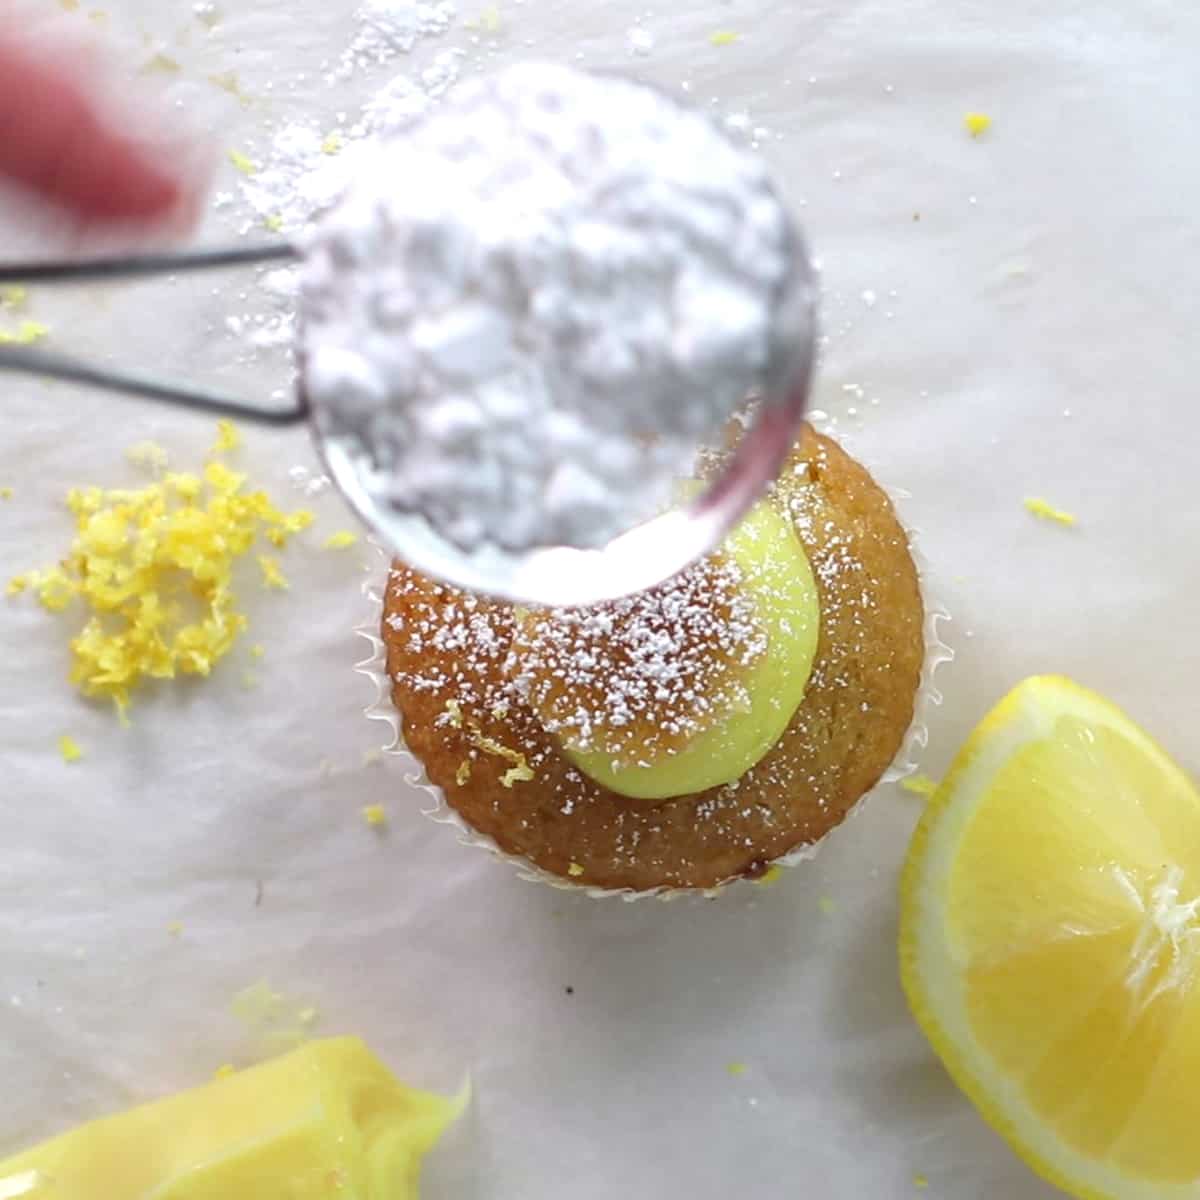 Dust cupcake with powdered sugar